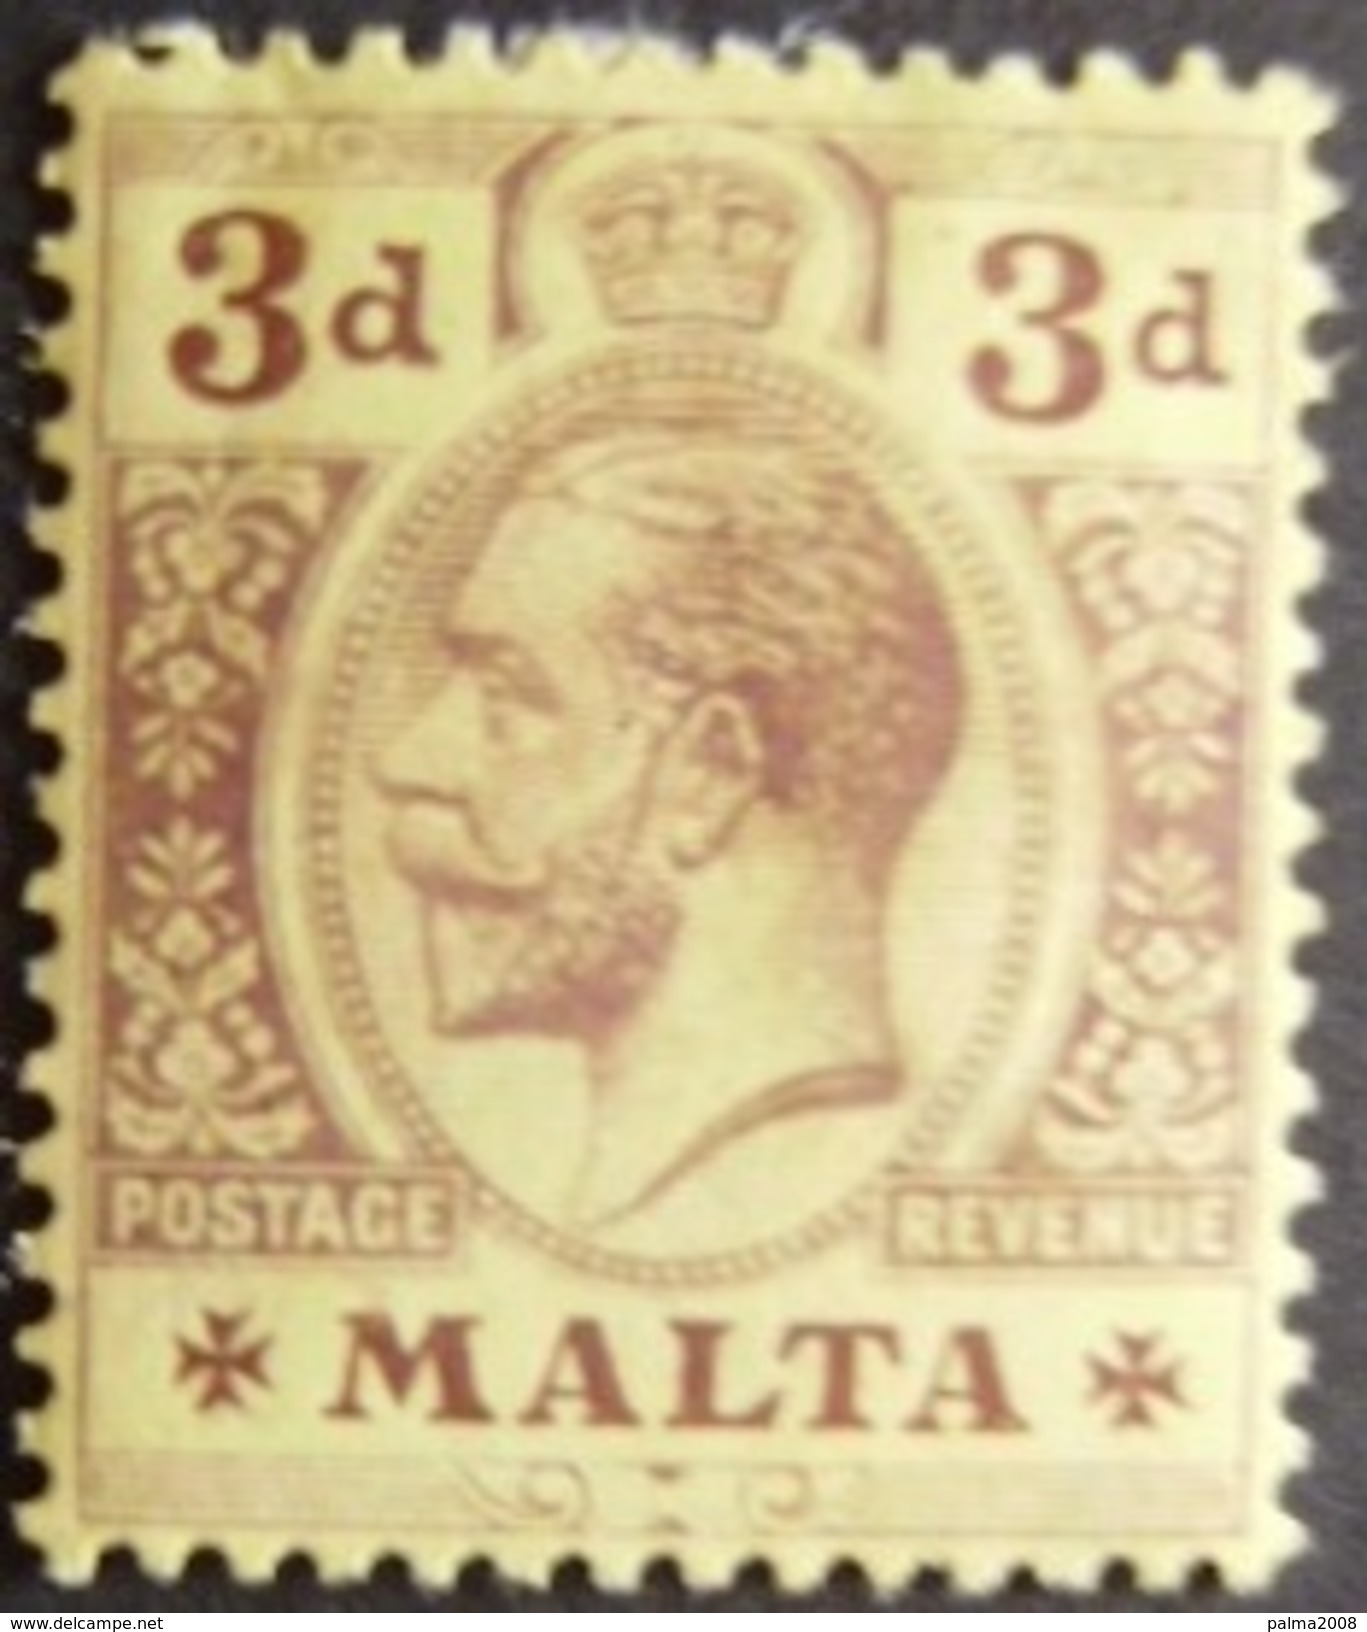 MALTA - IVERT Nº 47 - NUEVO SIN GOMA (Y046) - Malta